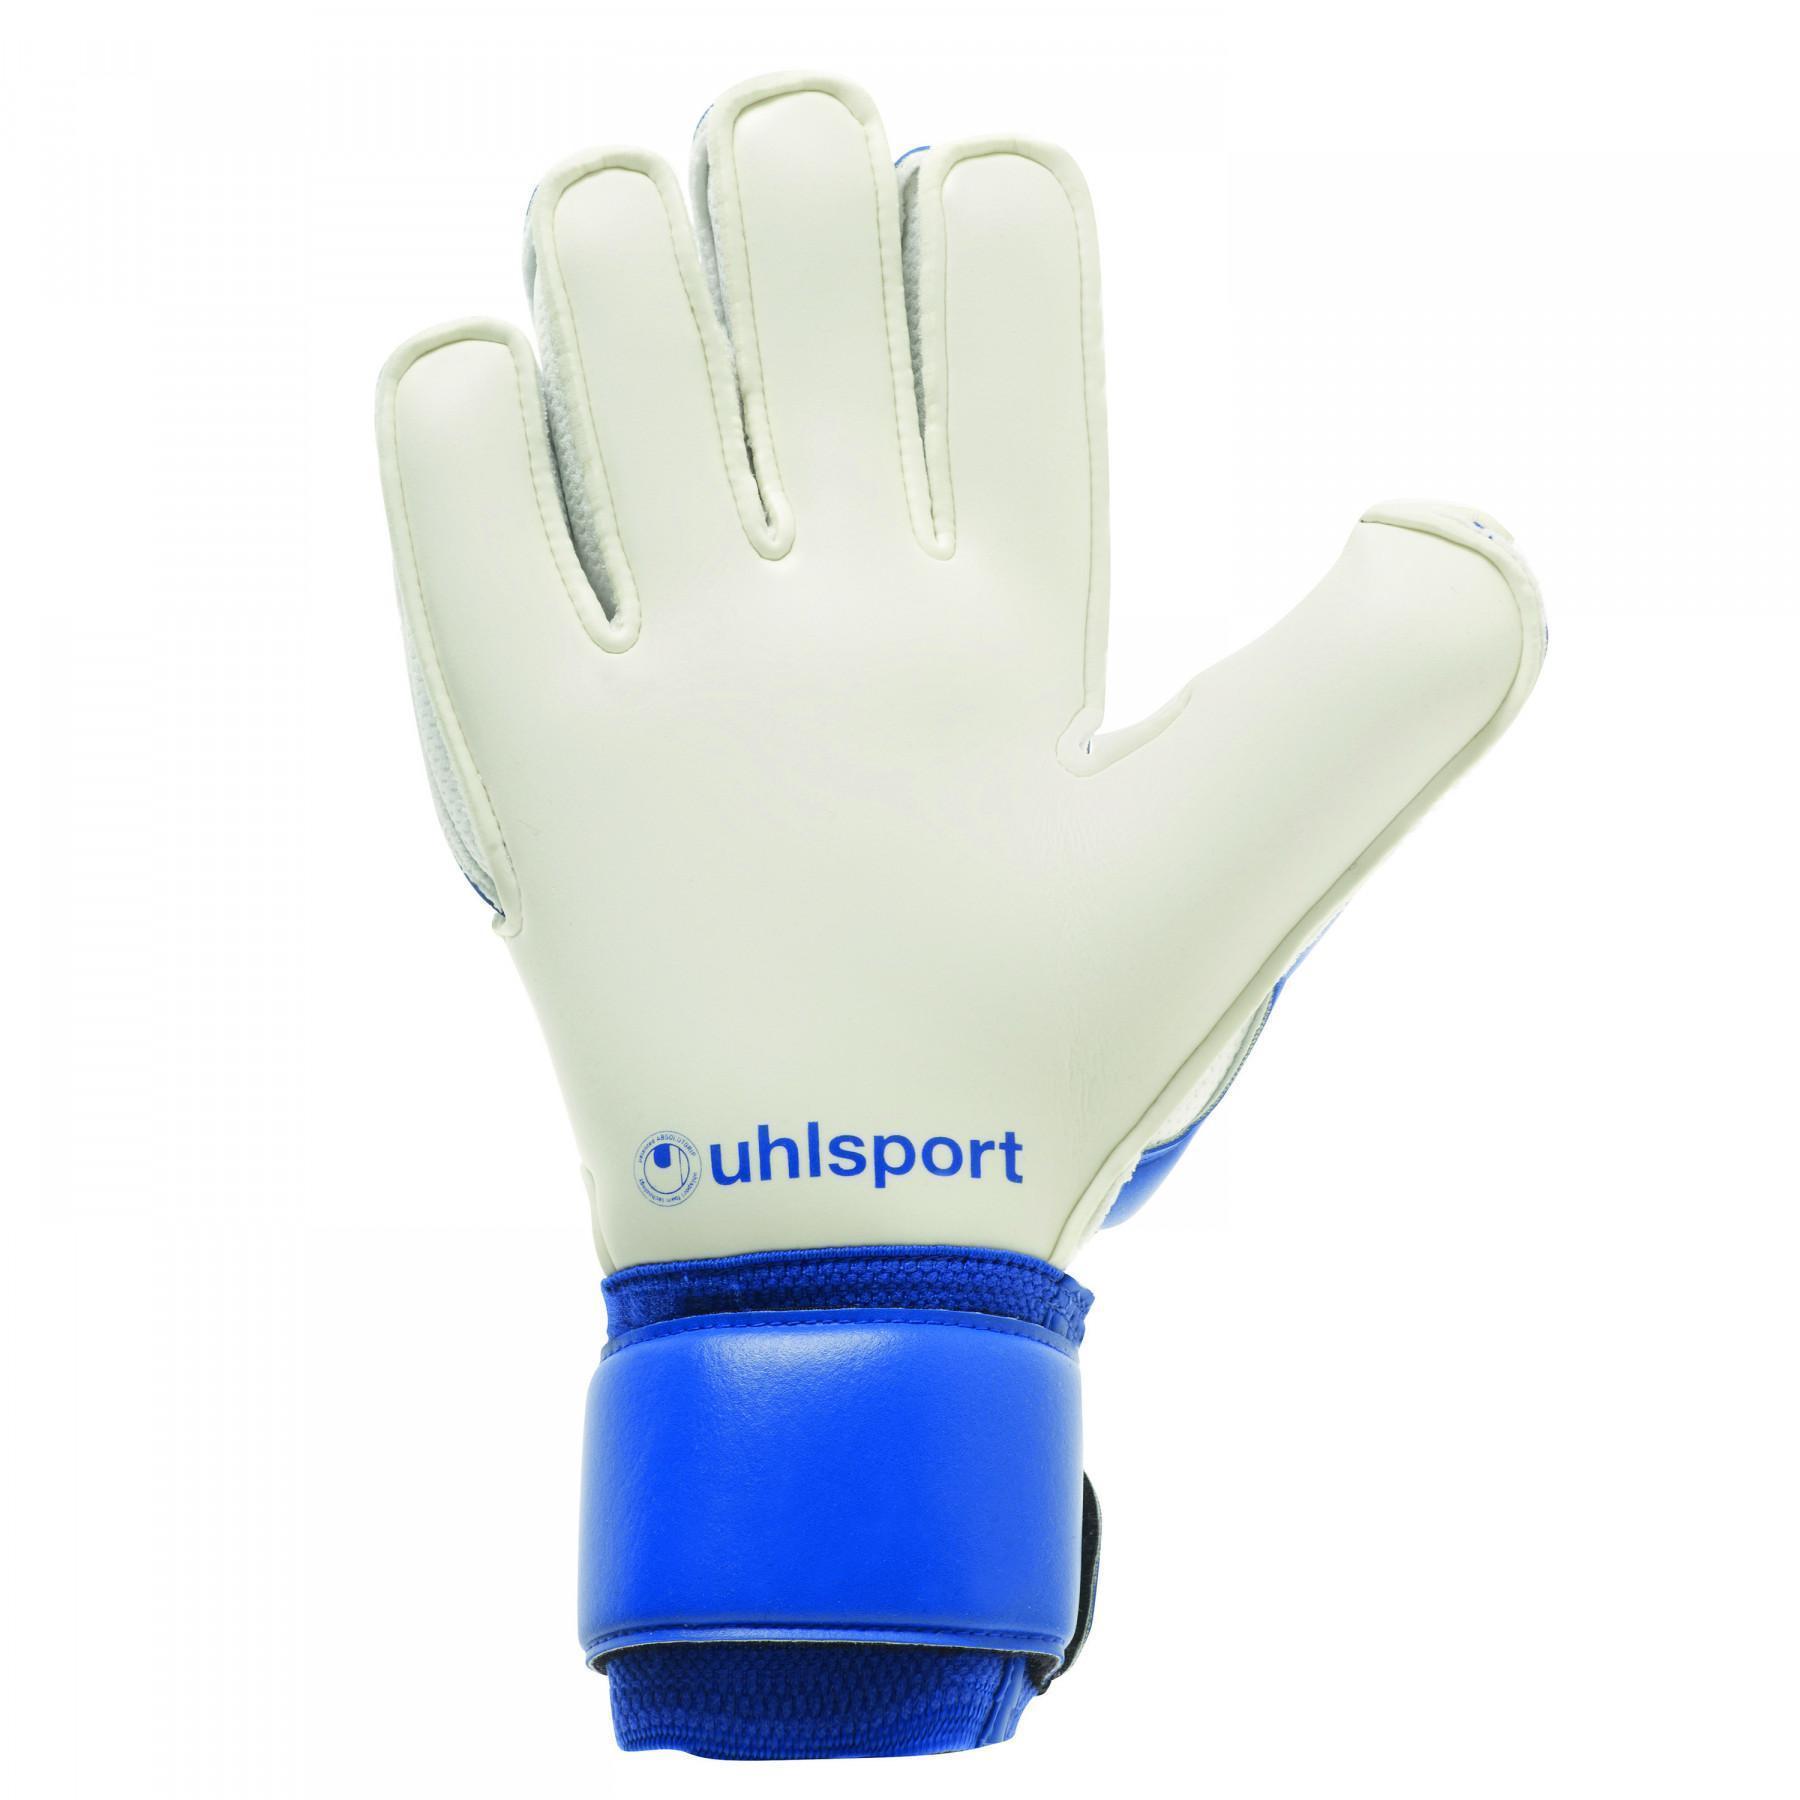 Goalkeeper gloves Uhlsport Absolutgrip Stand Alone